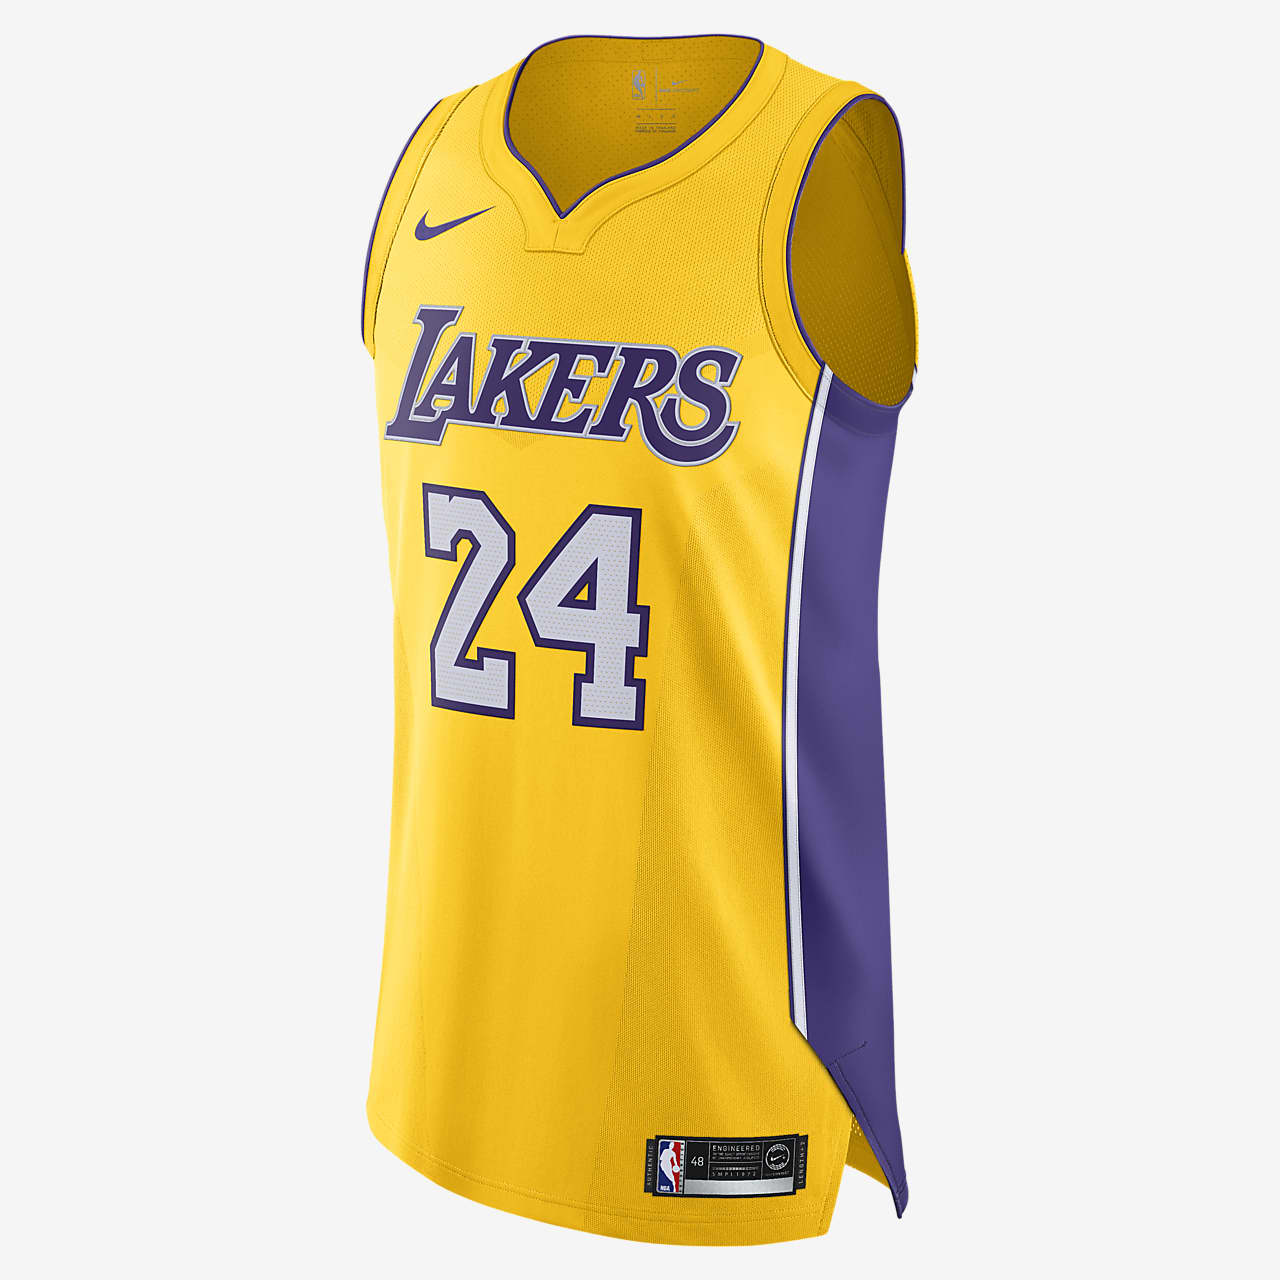 洛杉矶湖人队 (Kobe Bryant) Icon Edition Nike NBA Authentic Jersey 男子球衣